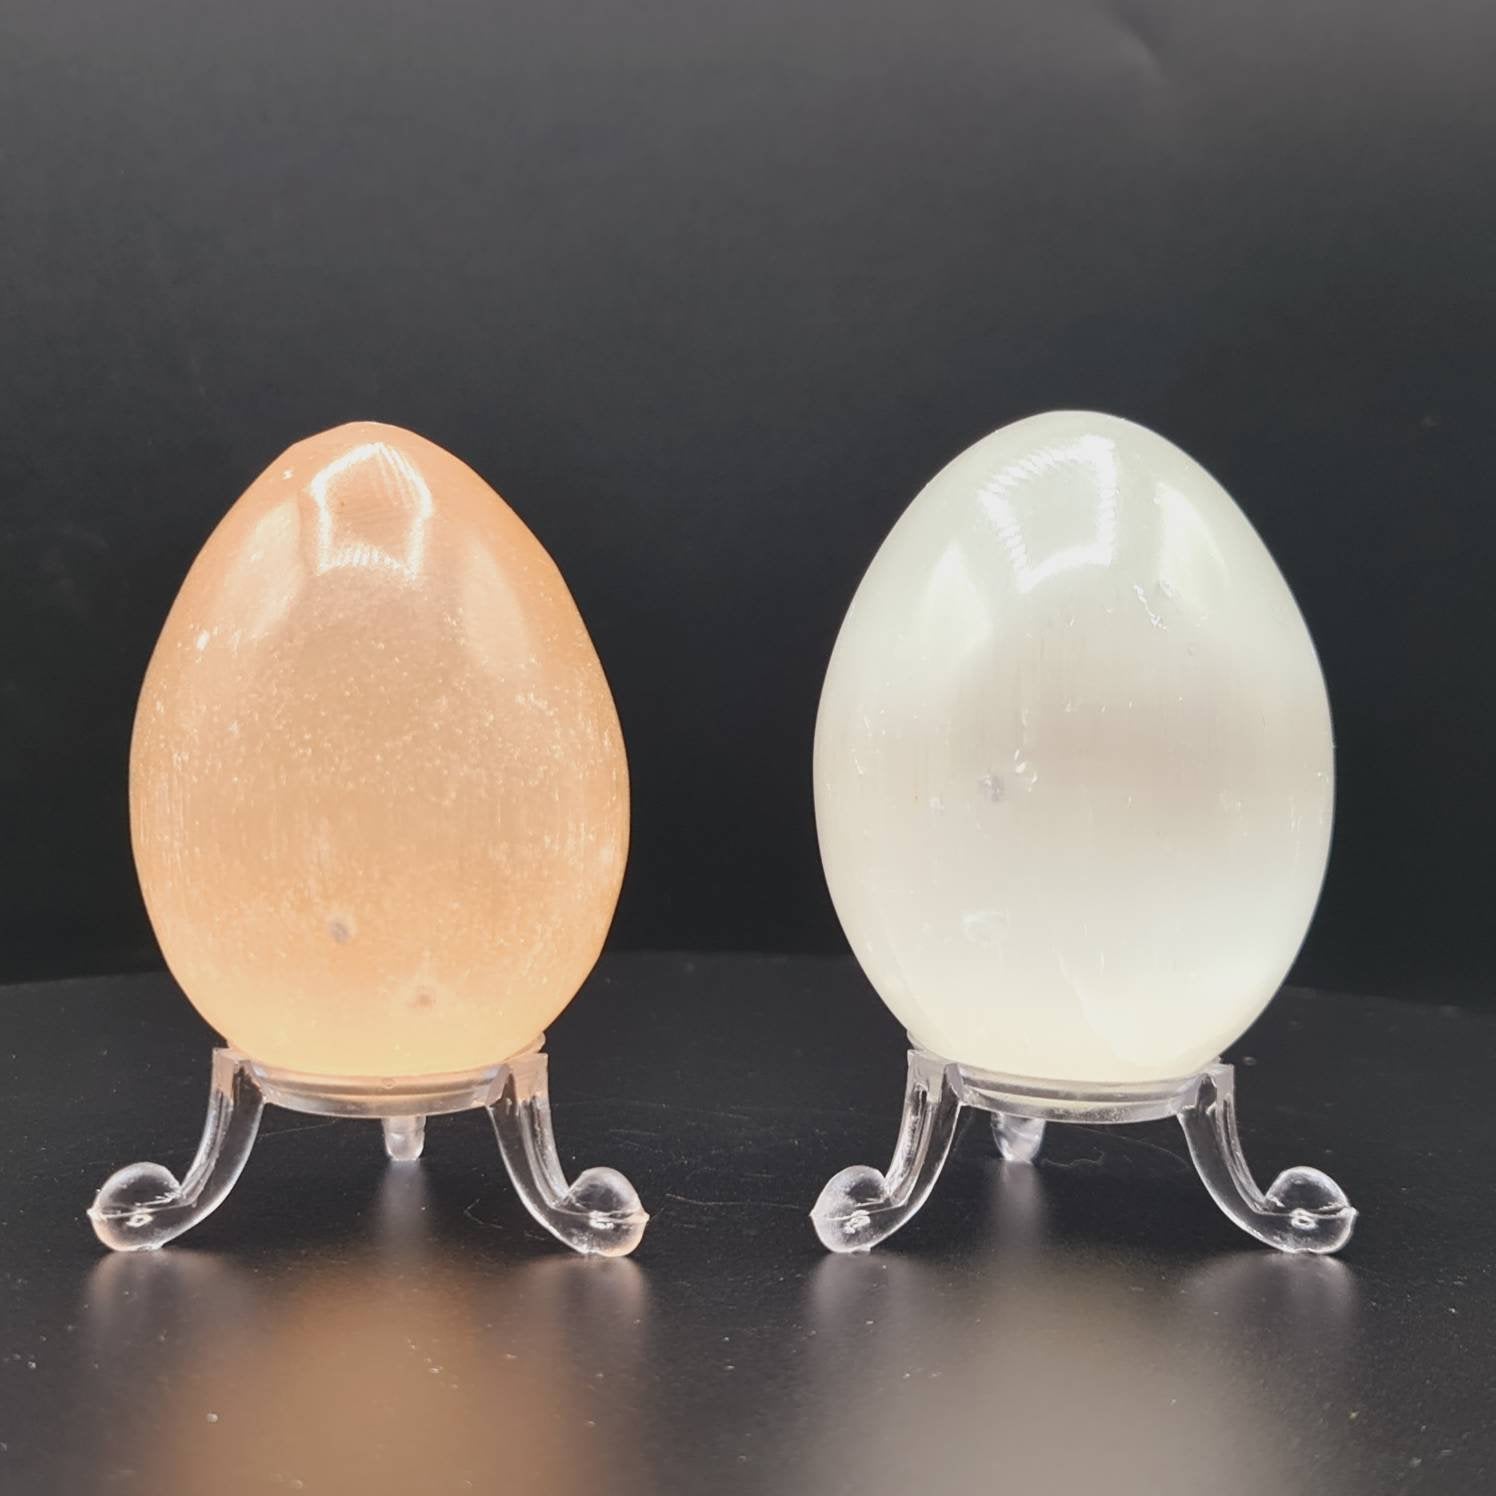 Selenite Egg-Shaped Crystal Display Piece